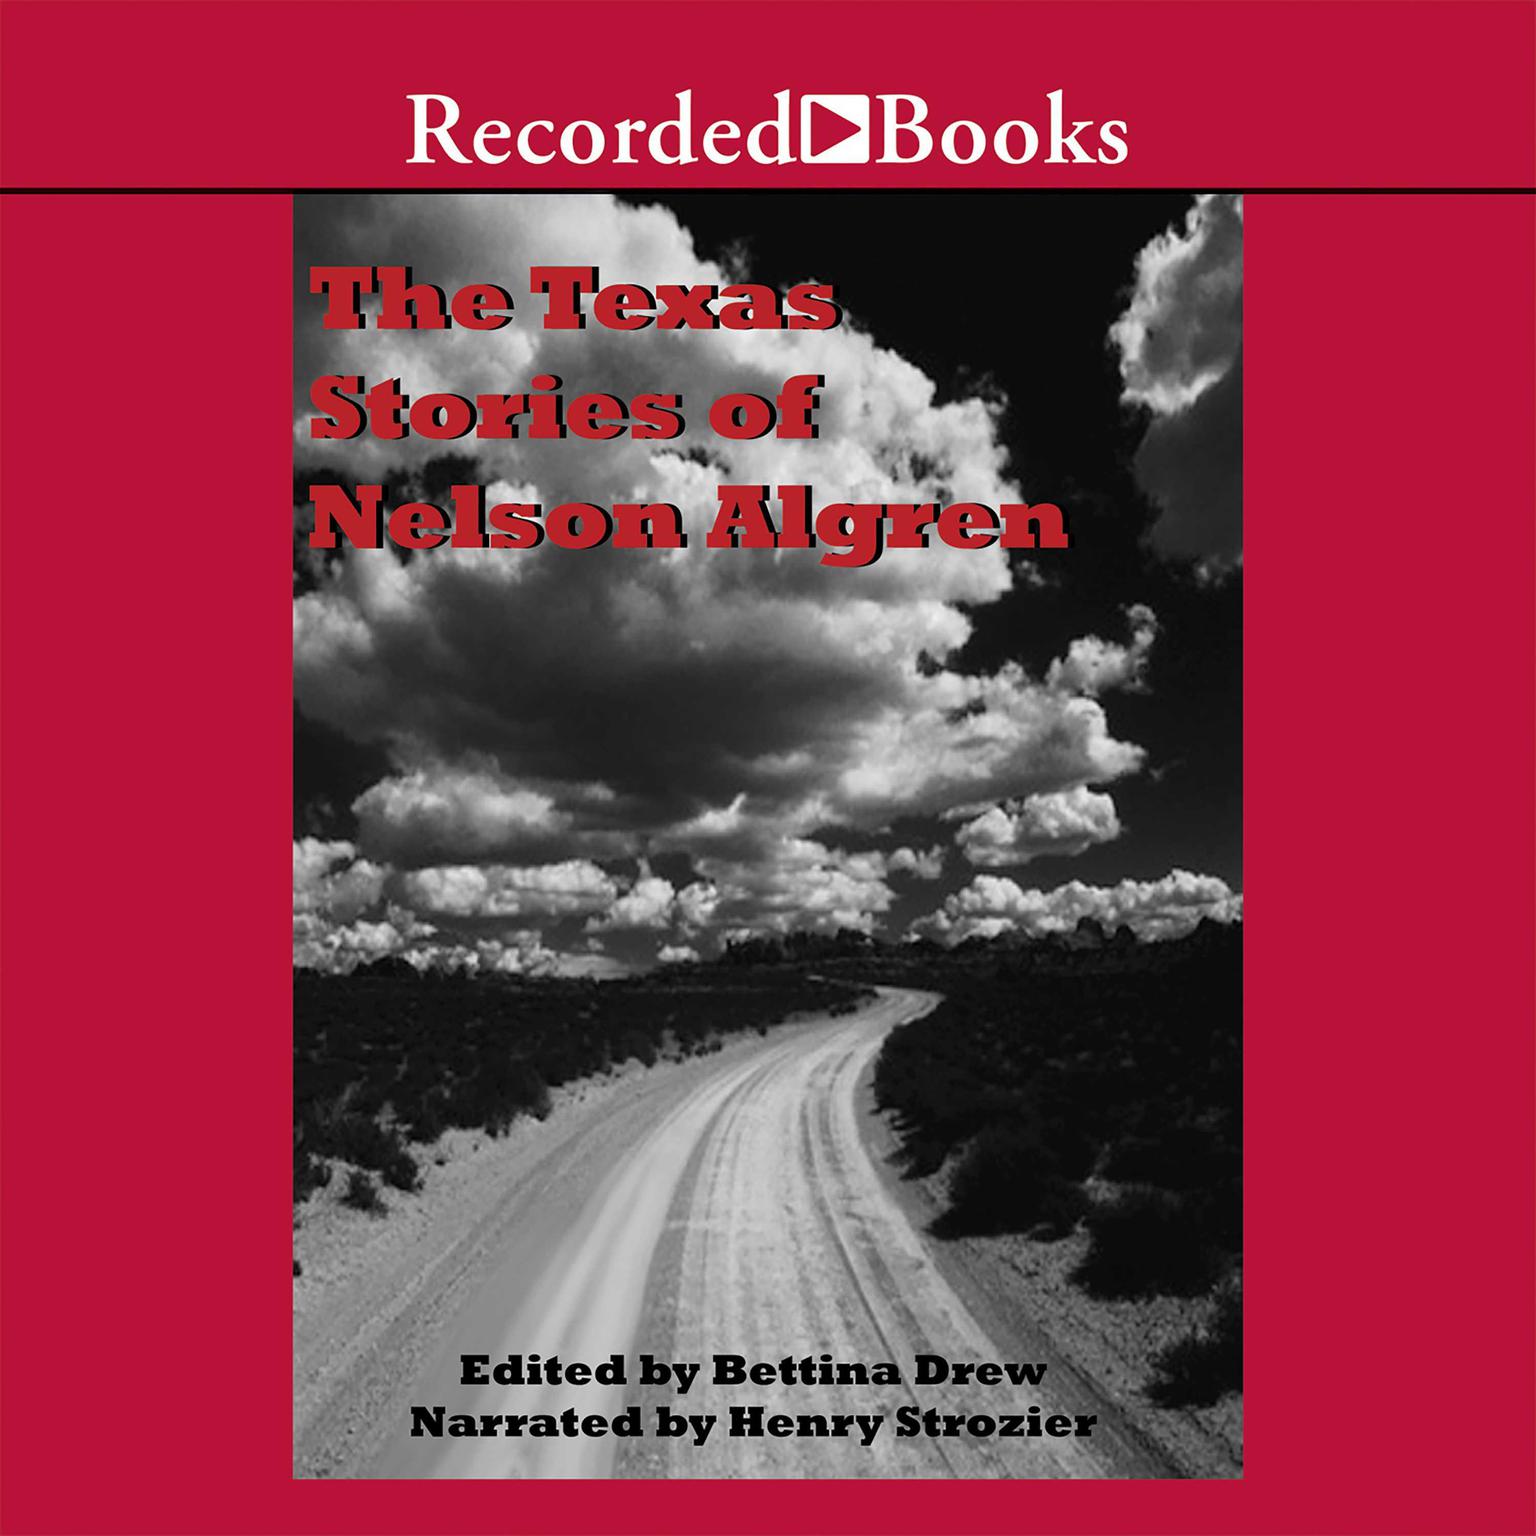 The Texas Stories of Nelson Algren: Edited by Bettina Drew Audiobook, by Nelson Algren